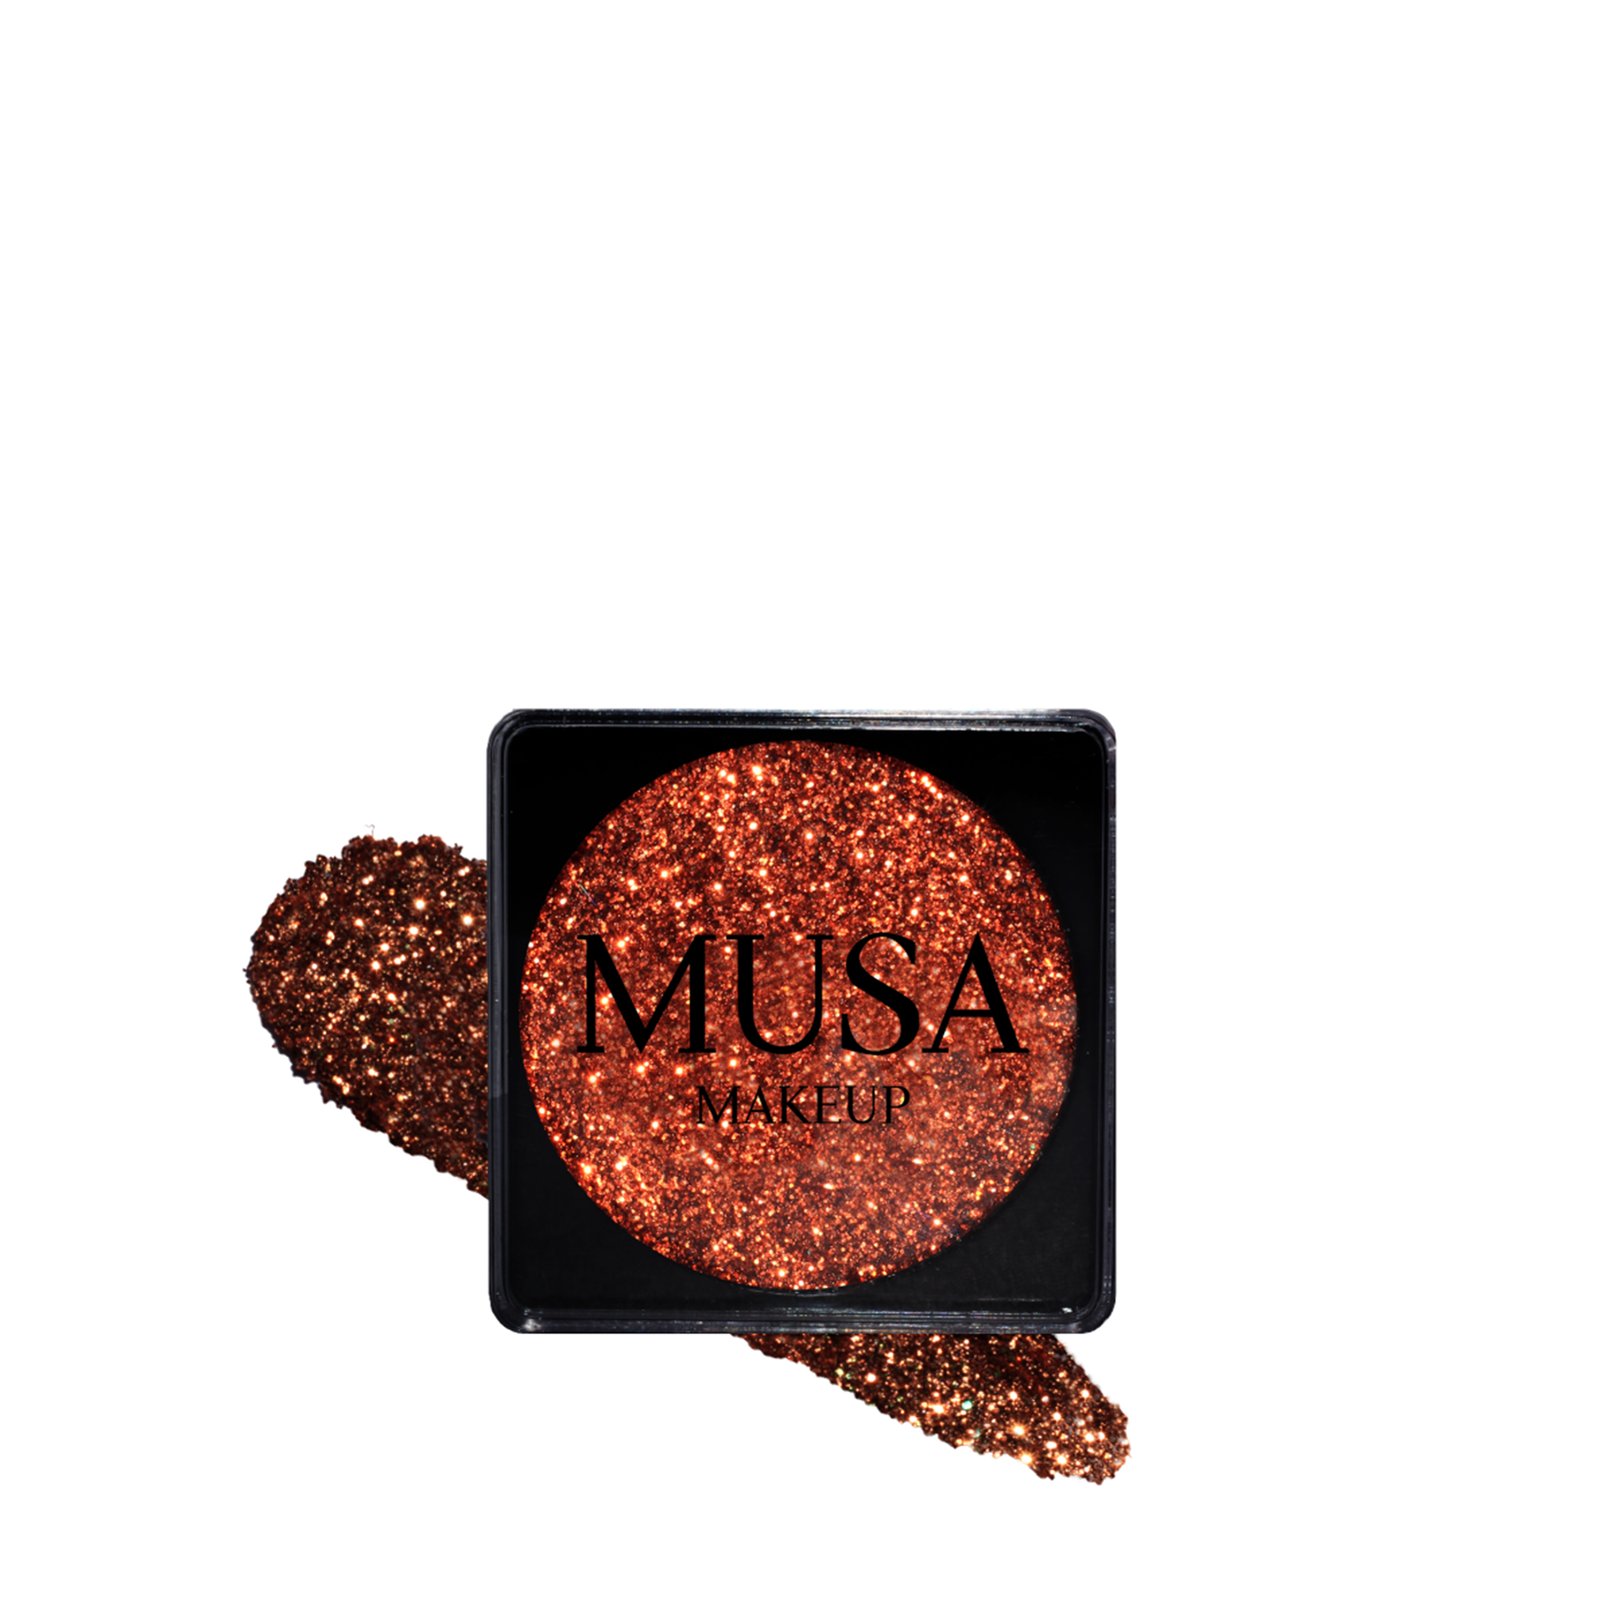 MUSA Makeup Creamy Glitter Hestia 4g (0.14 oz)